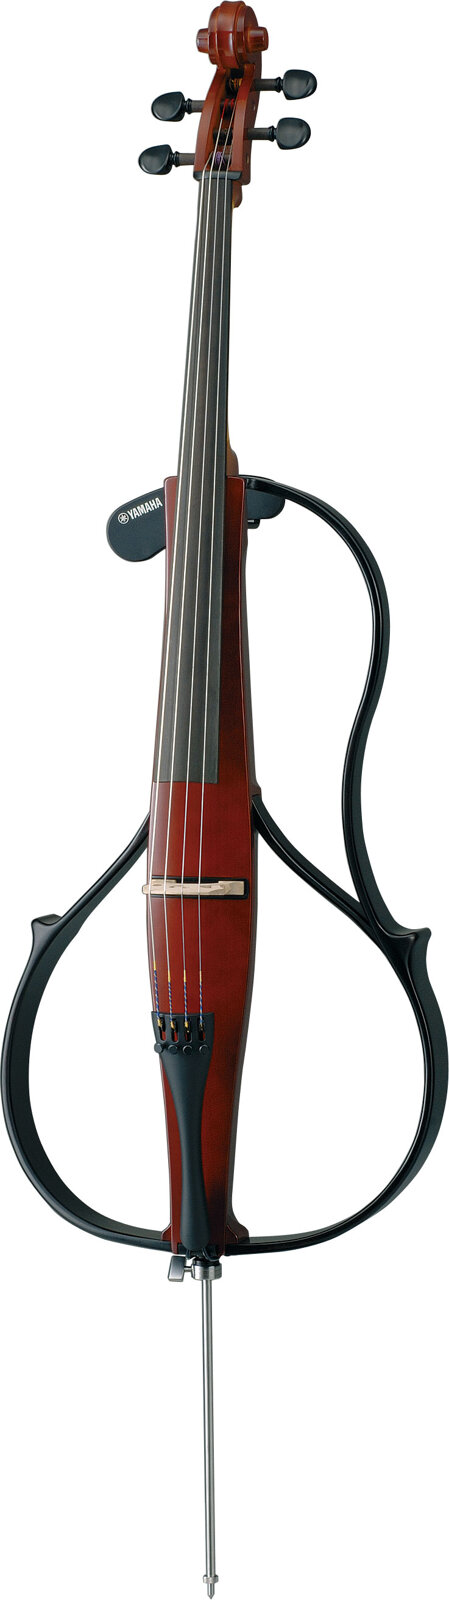 Yamaha Strings SVC-110 Violoncelle Silent, brun : photo 1